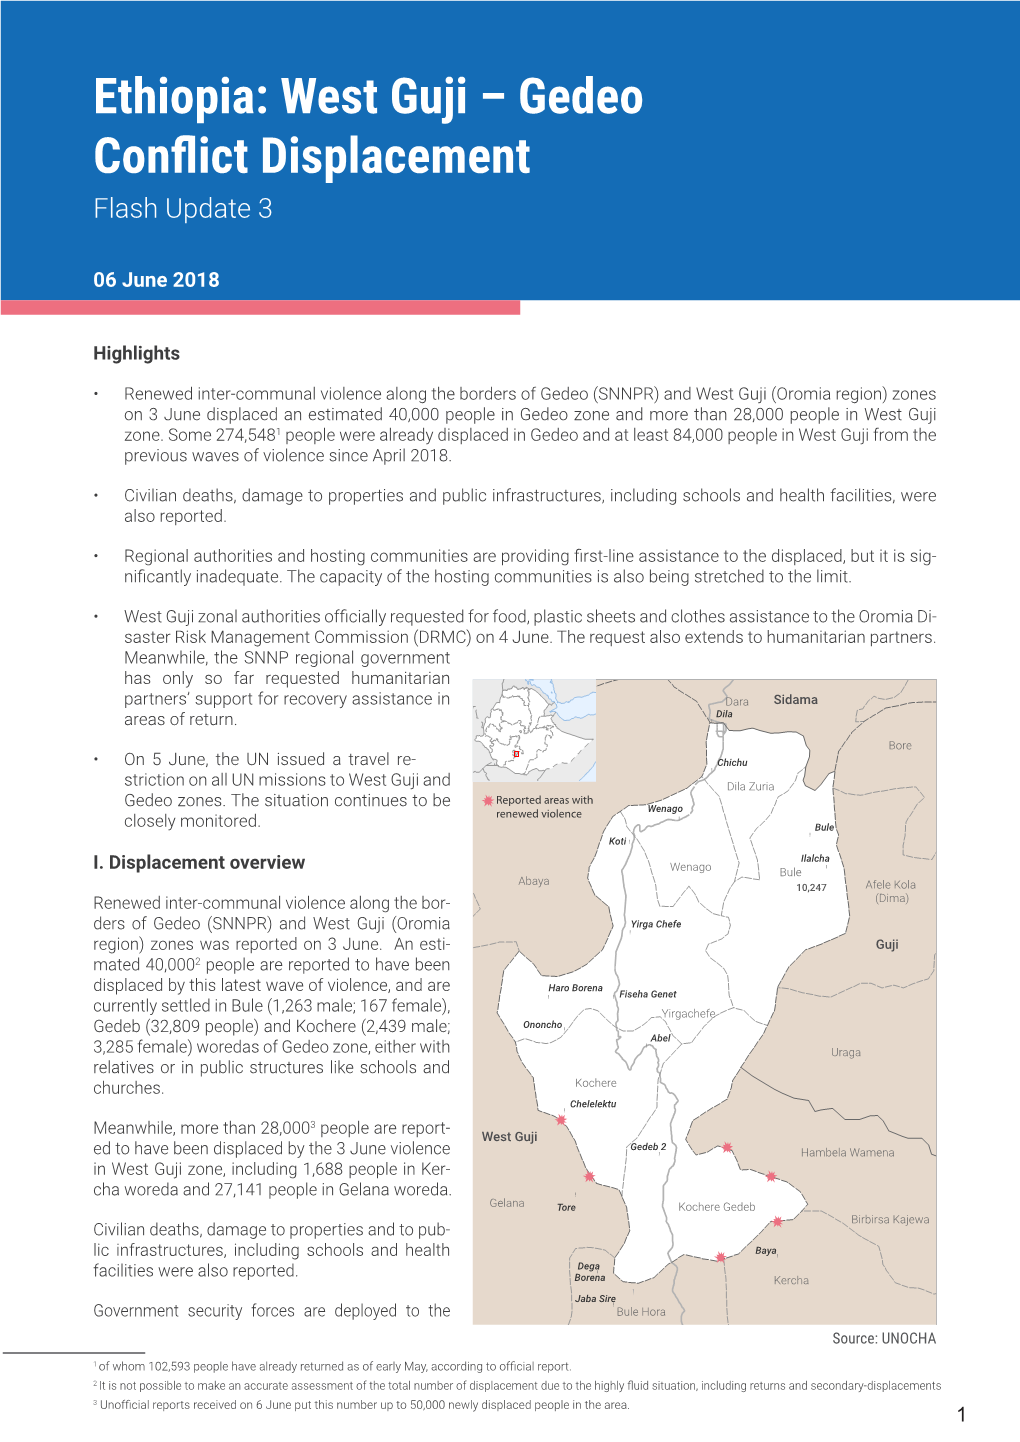 Ethiopia: West Guji – Gedeo Conflict Displacement Flash Update 3